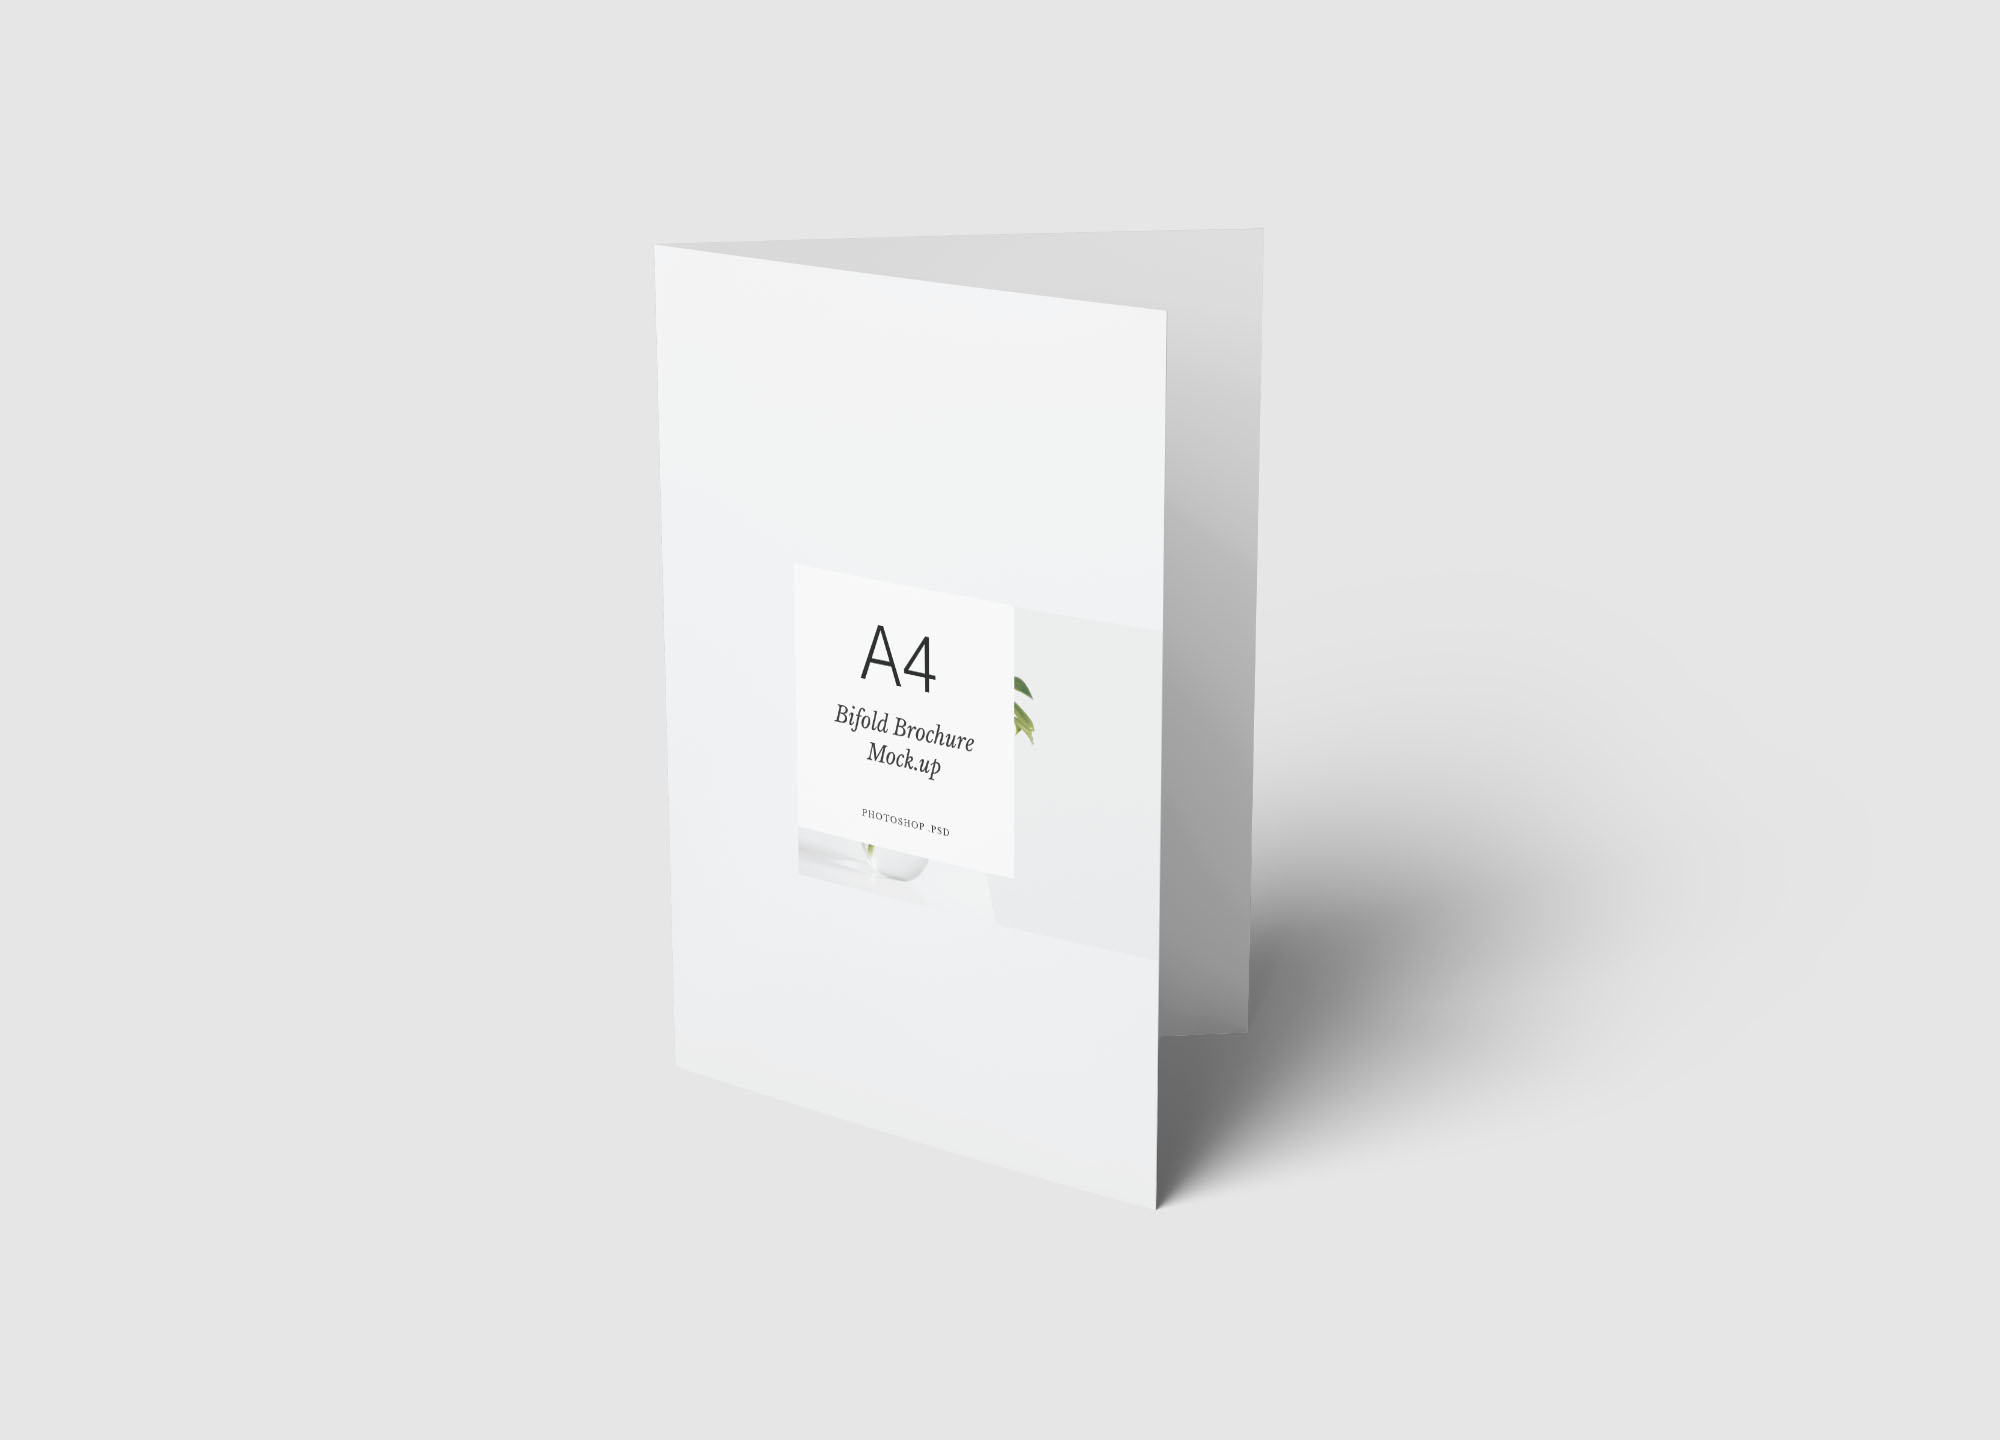 A4尺寸大小双折传单设计内页版式效果图样机模板 A4 Bifold Brochure Mockup插图(2)